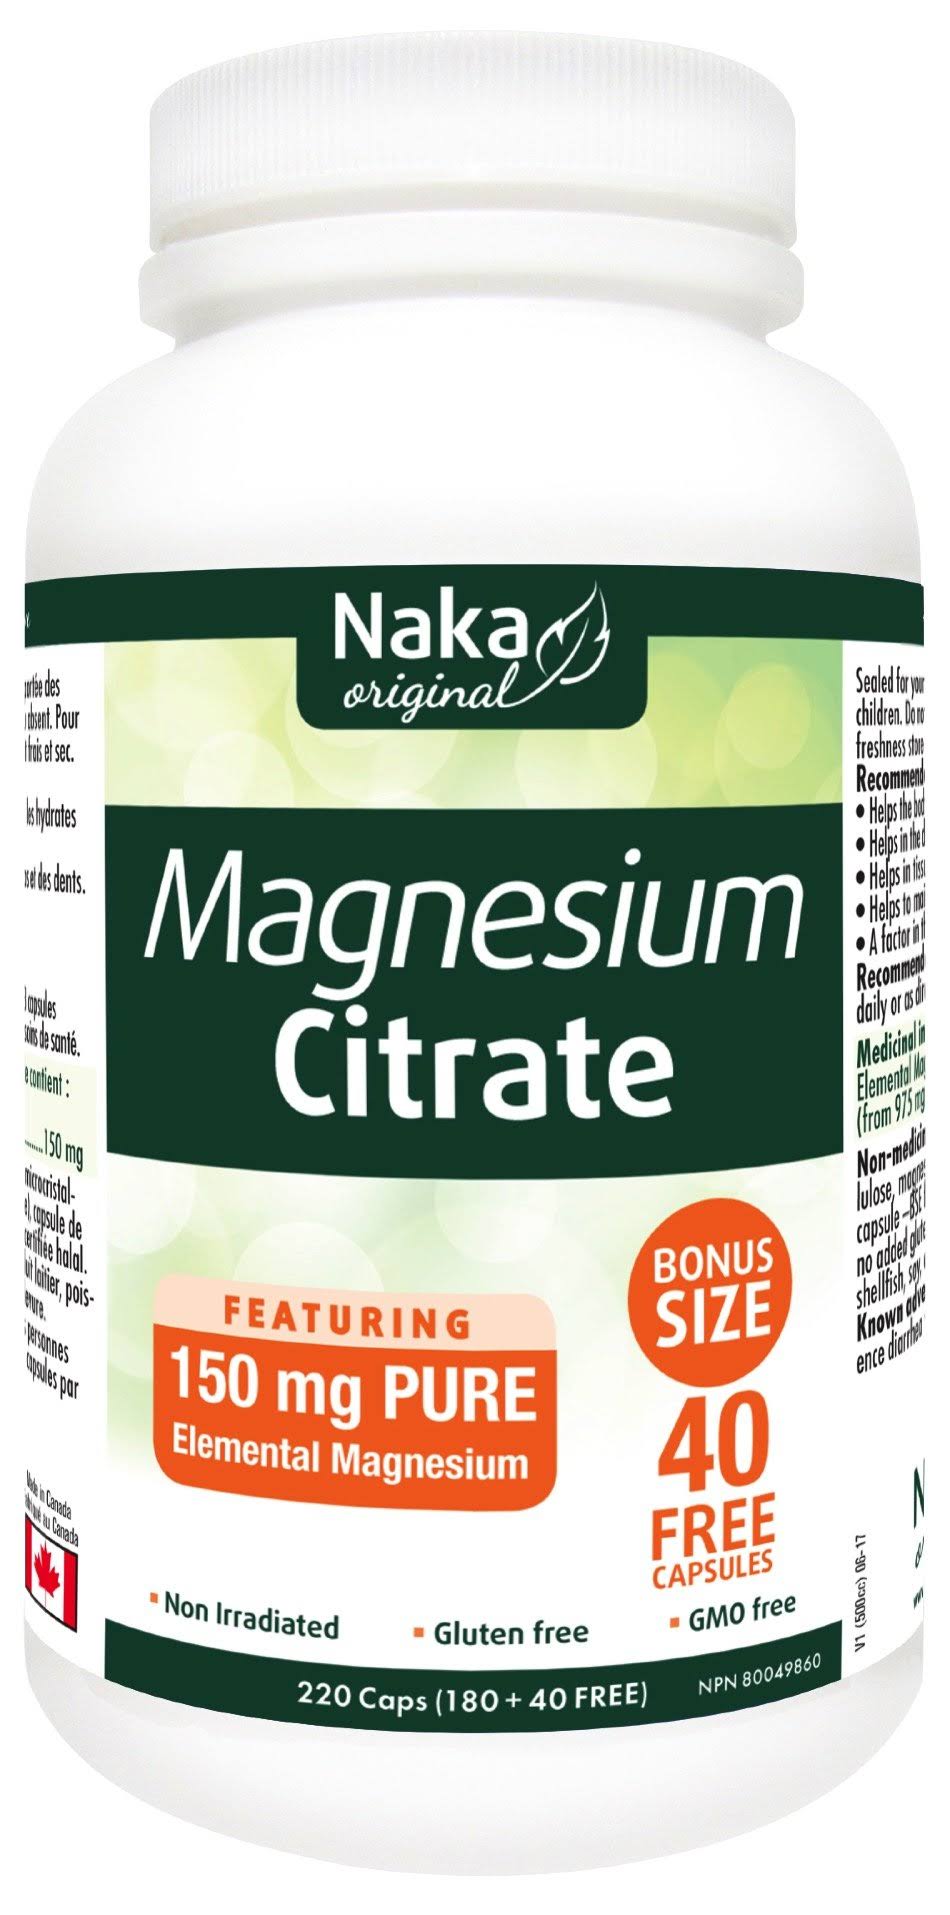 Naka Magnesium Citrate 150 mg - 220 capsules (180 + 40 FREE)